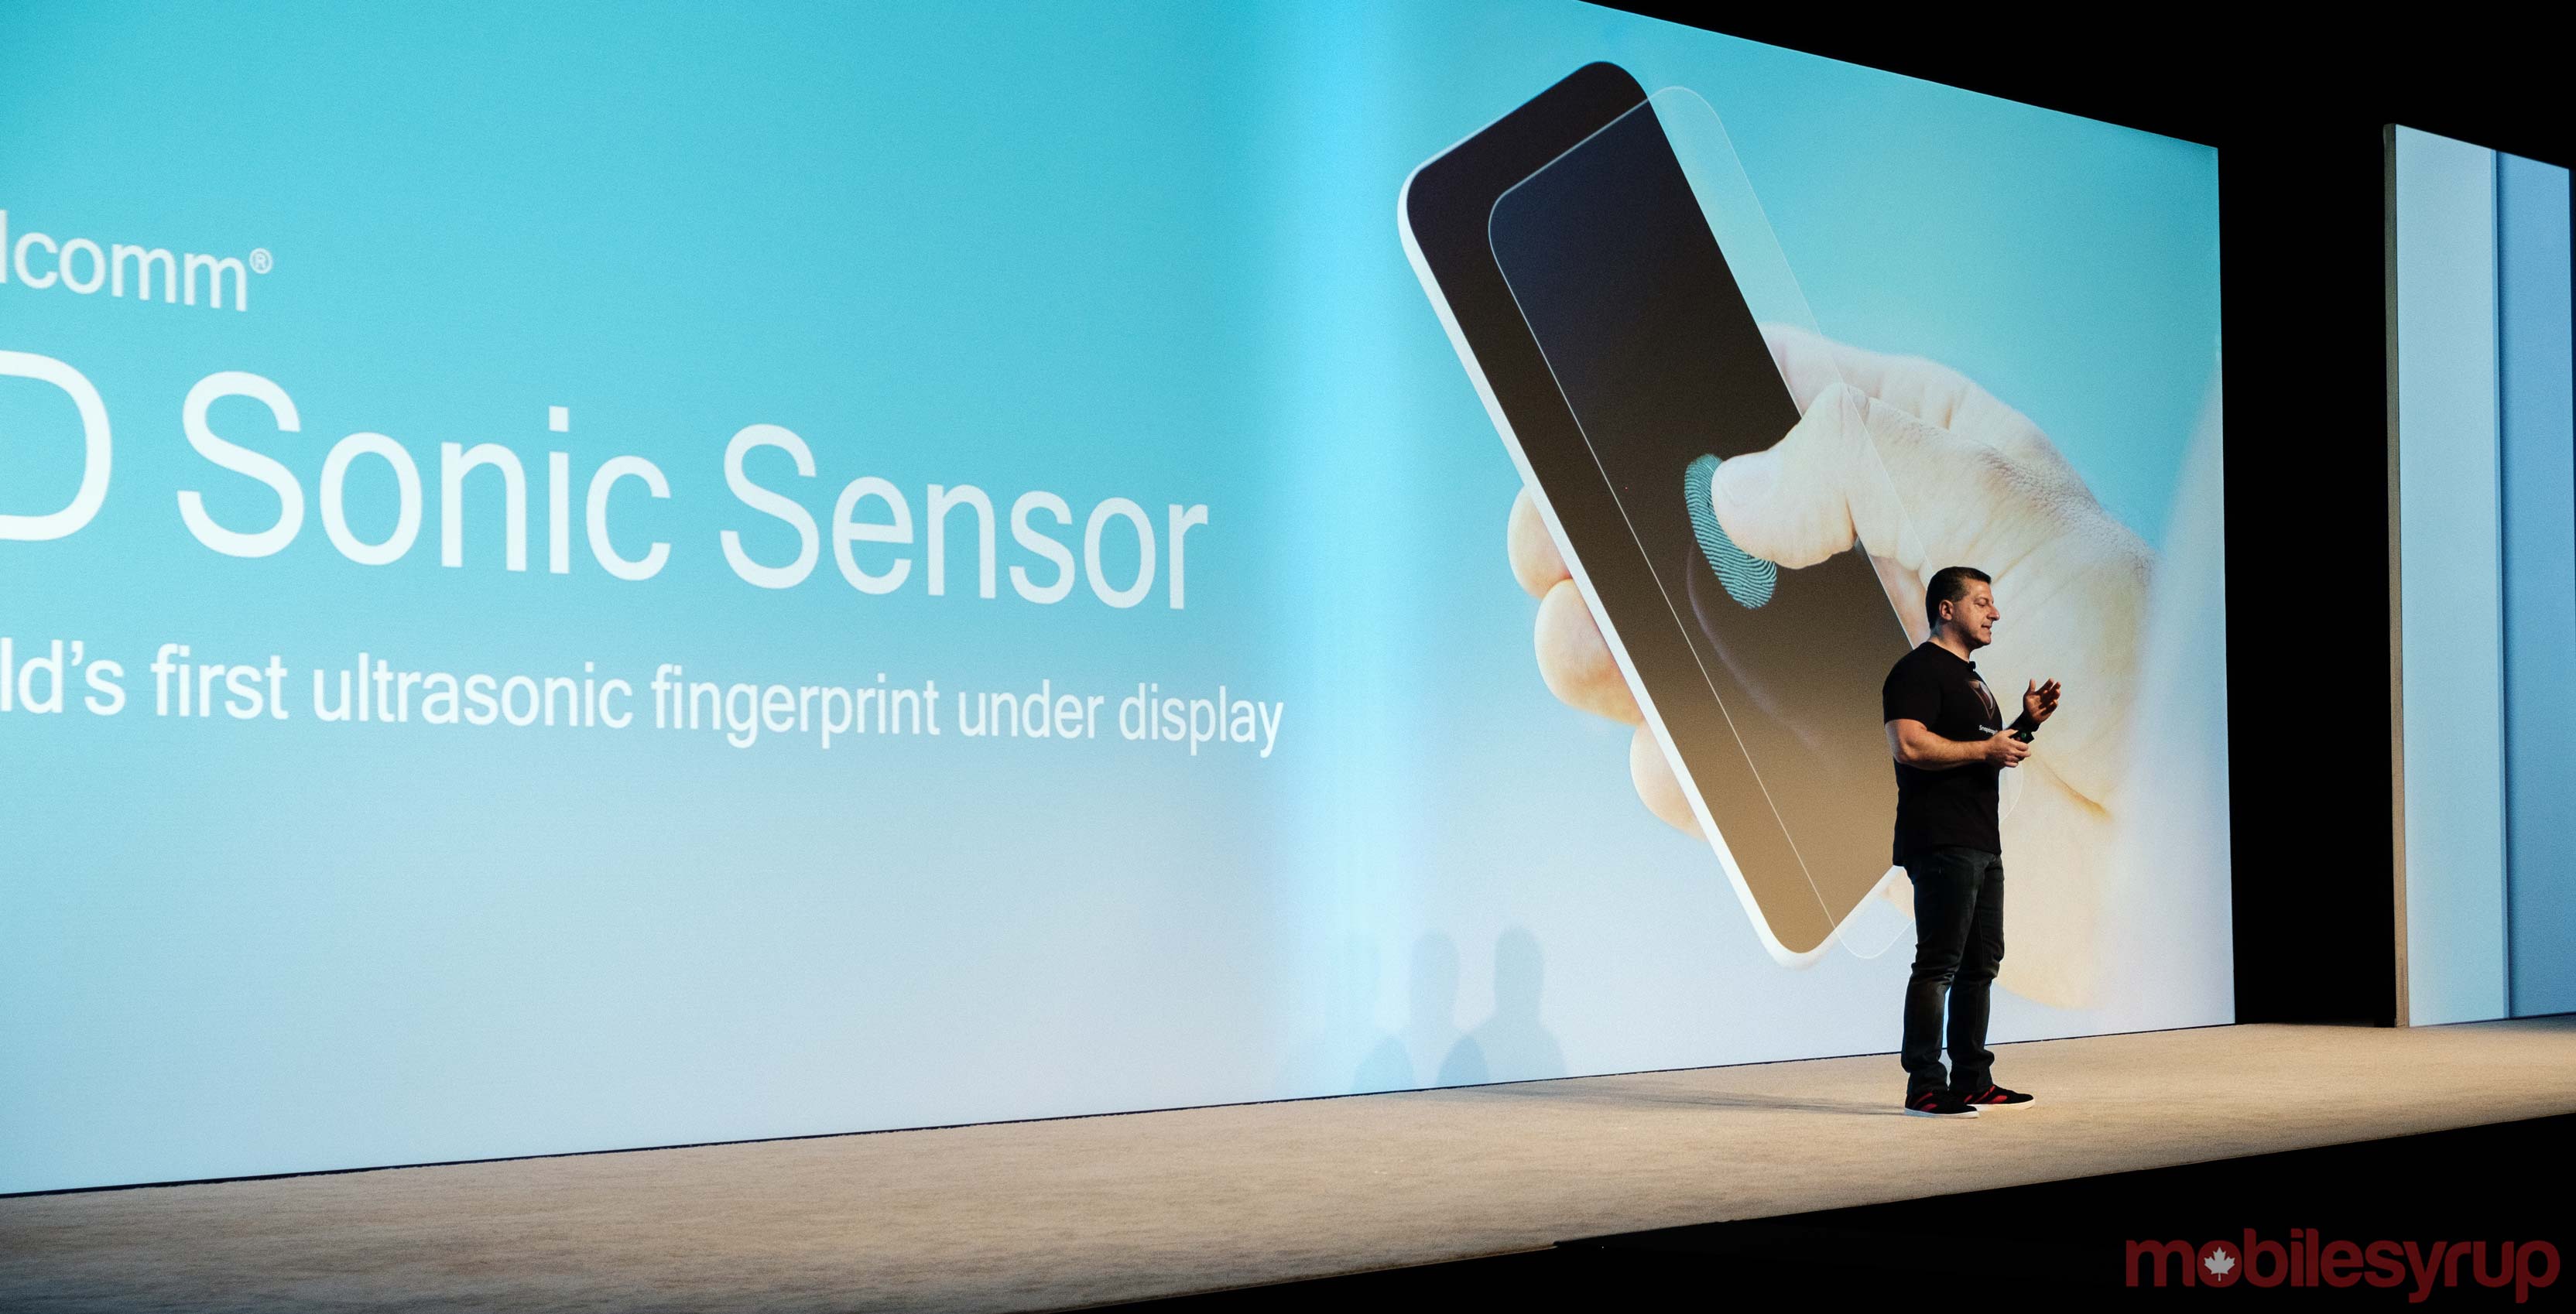 Qualcomm's announced its new 3D Sonic Sensor